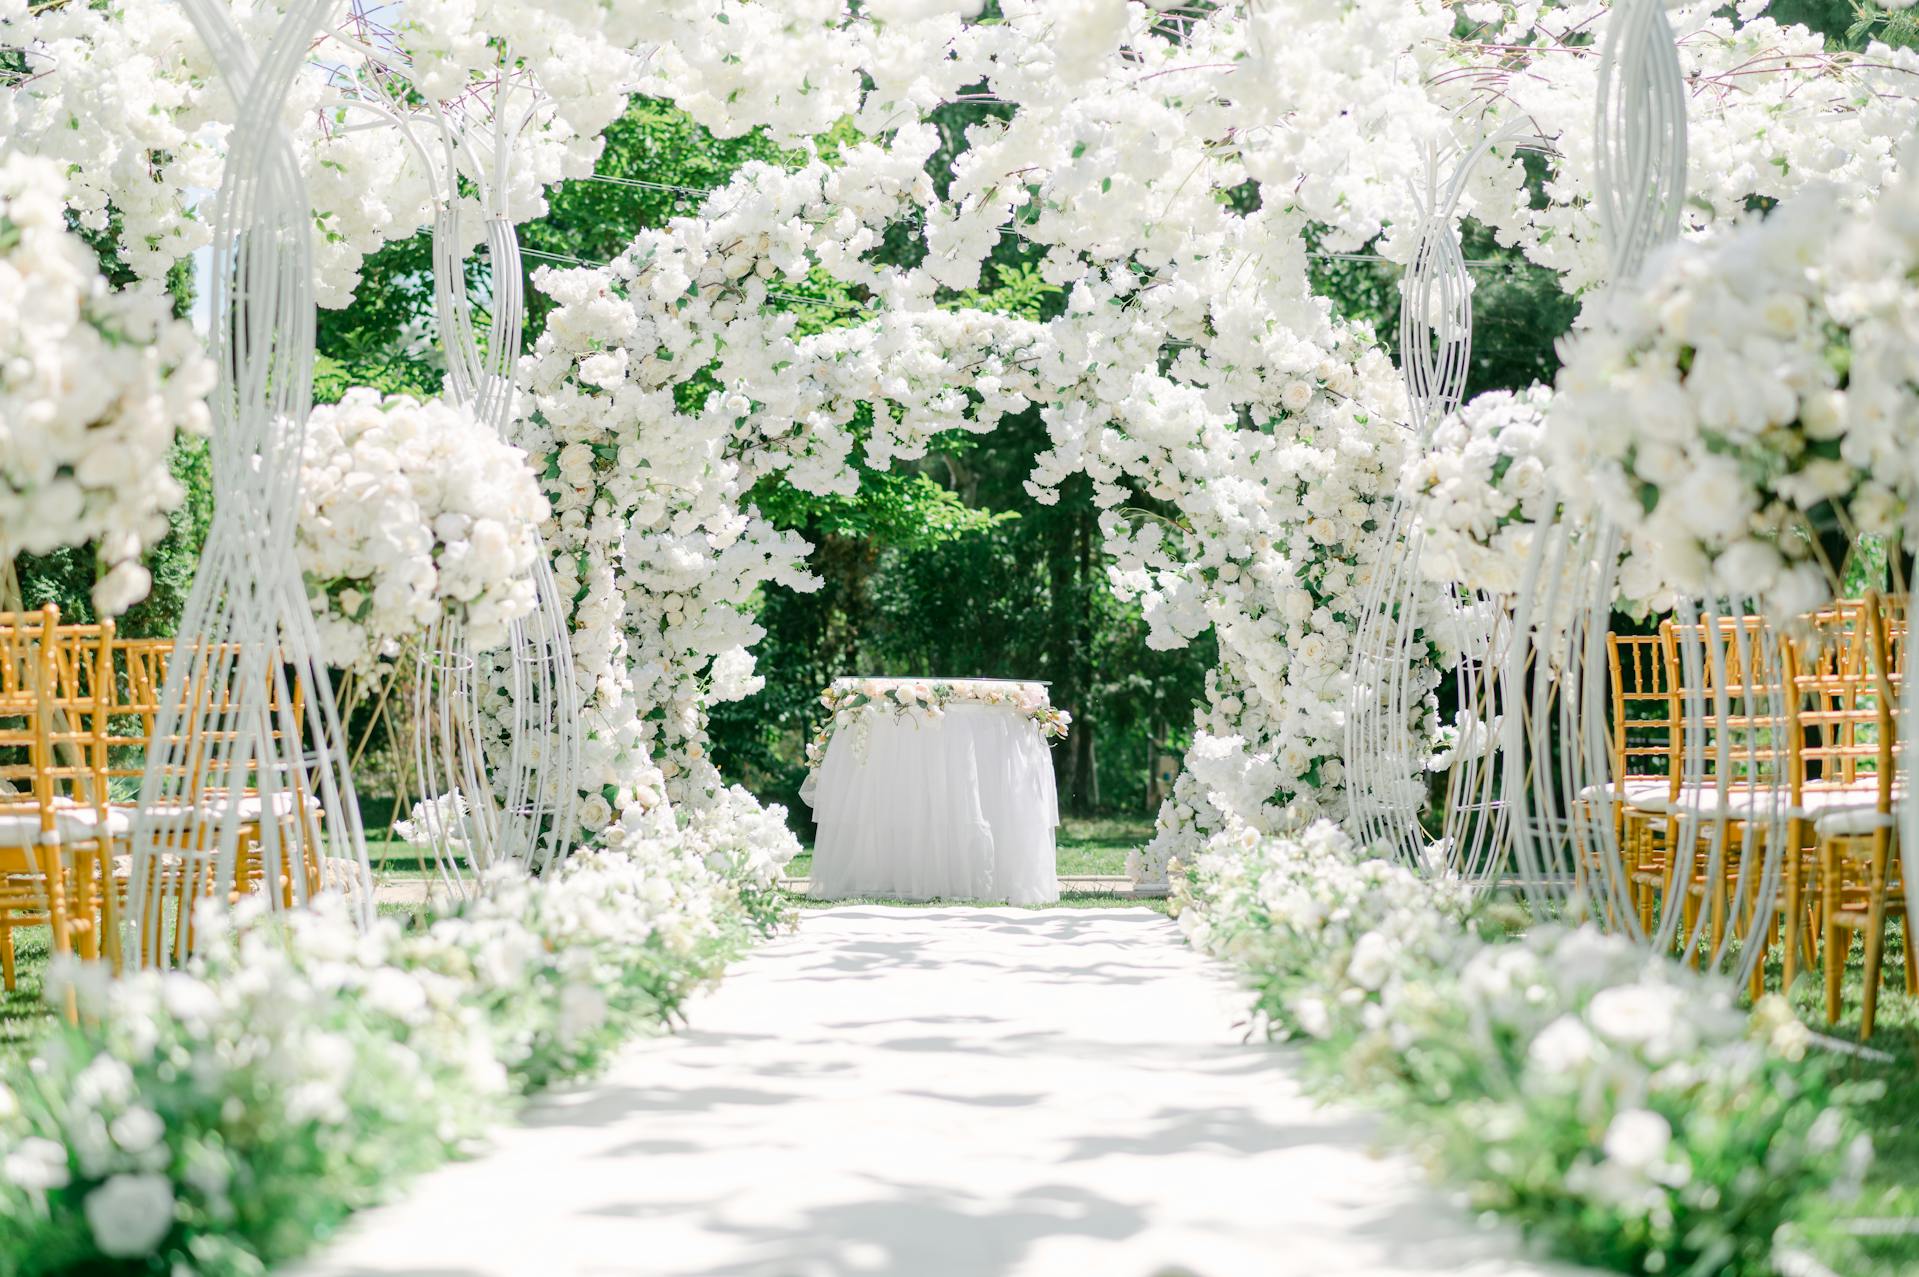 Une installation de mariage dans un jardin | Source : Pexels